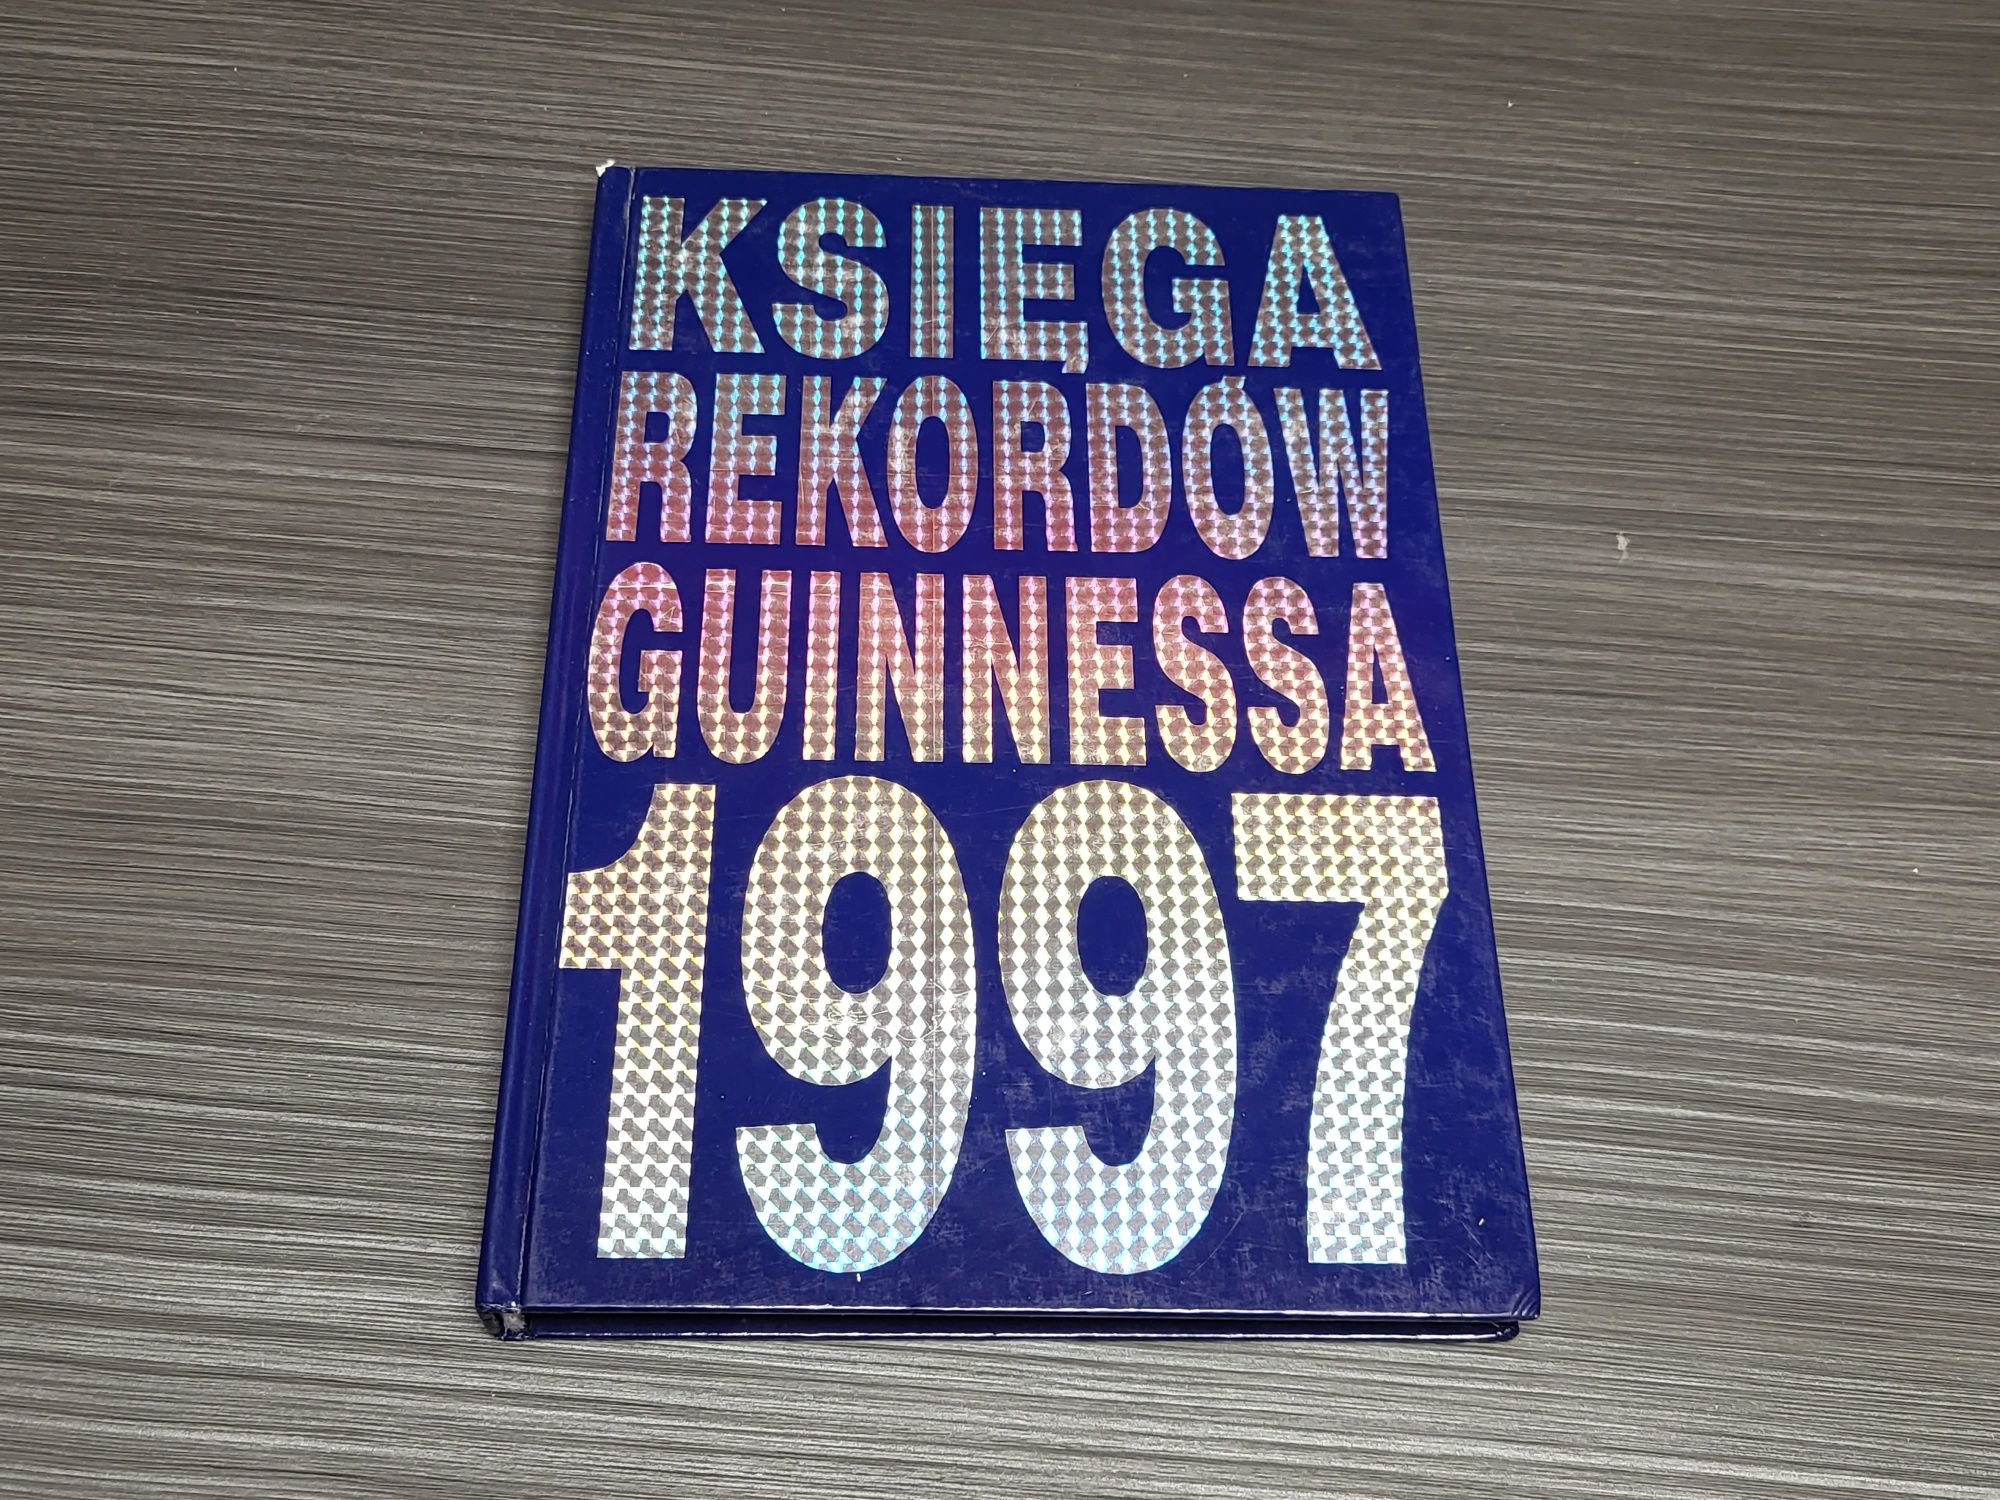 Księga rekordów Guinnessa 1997